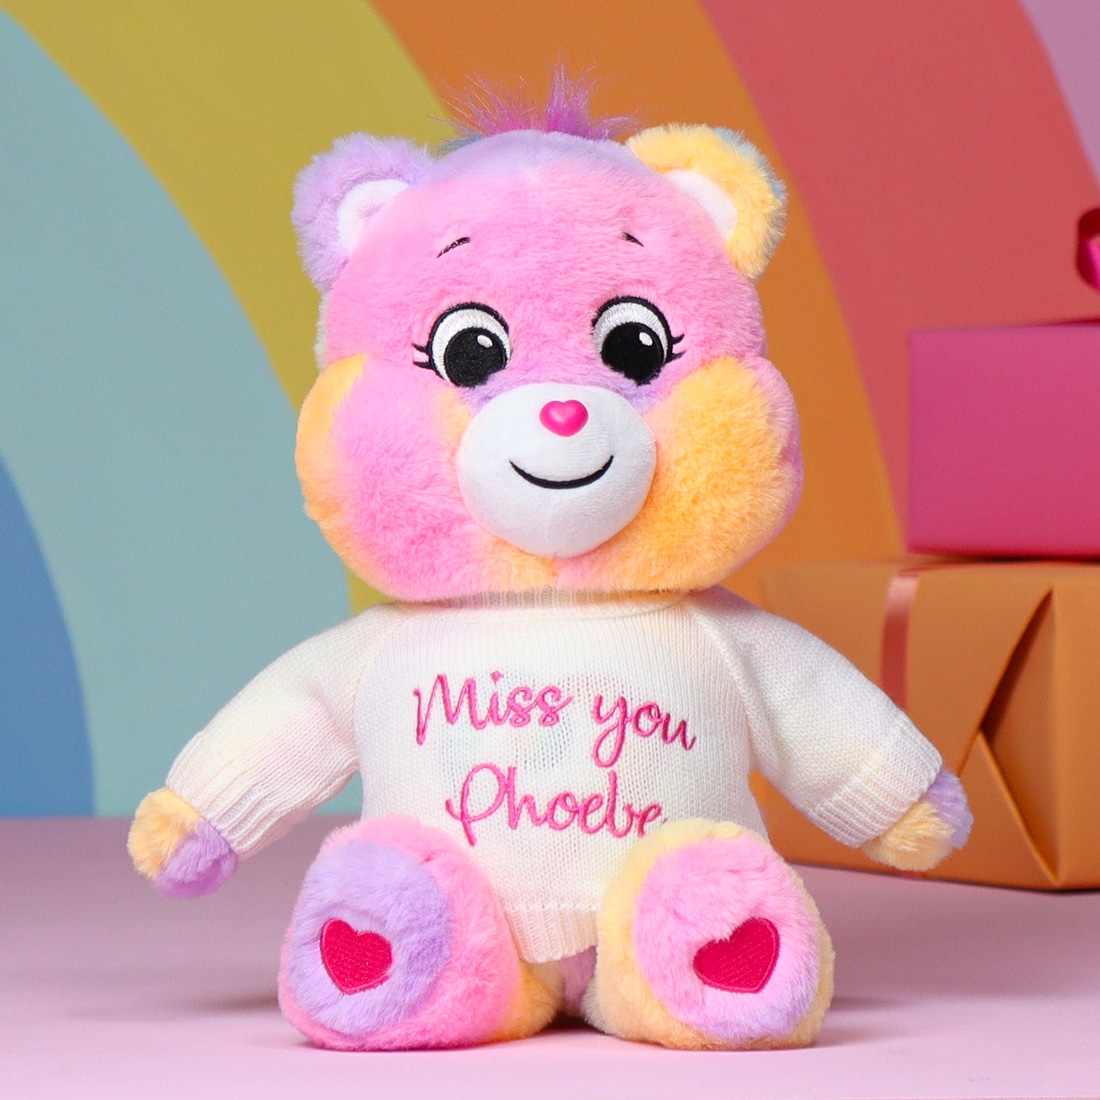 miss you phoebe care bear plush toy